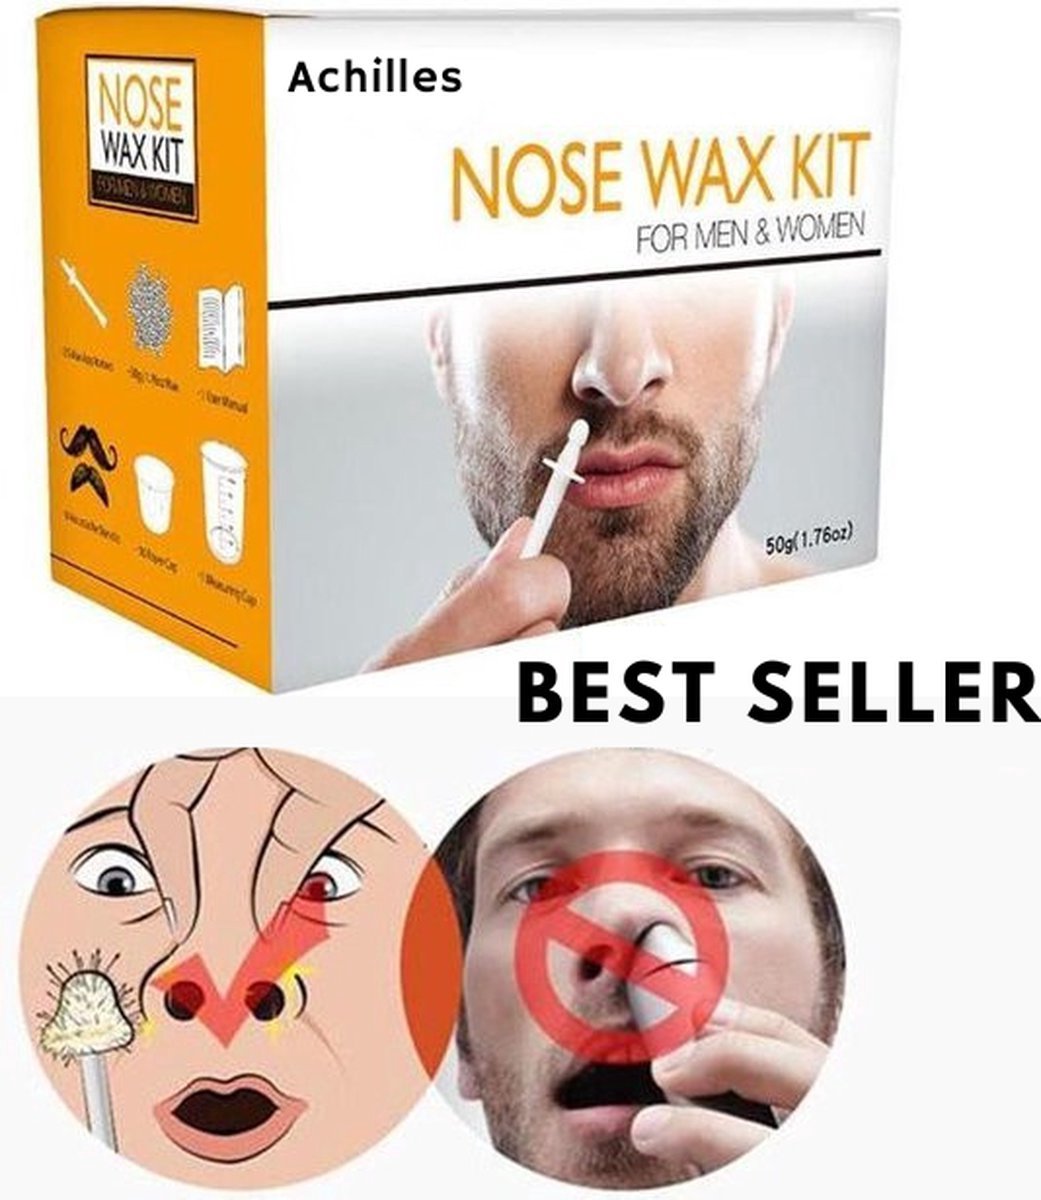 andmetics Wax Kit Nose & Ear Hair Removal Wax for men